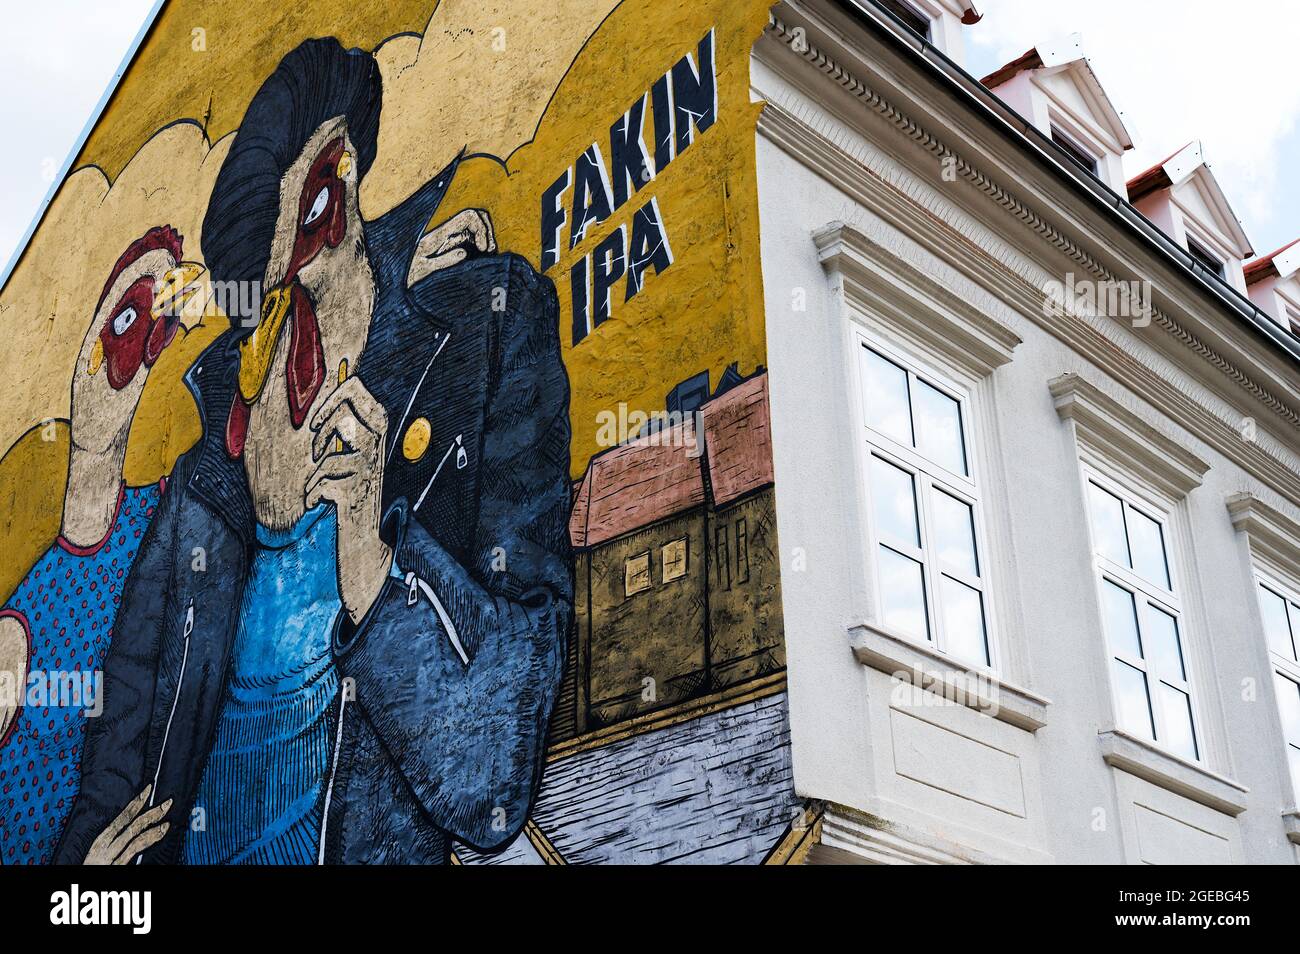 Groovy Street art murale sopra un bar a Zagabria, Croazia Foto Stock